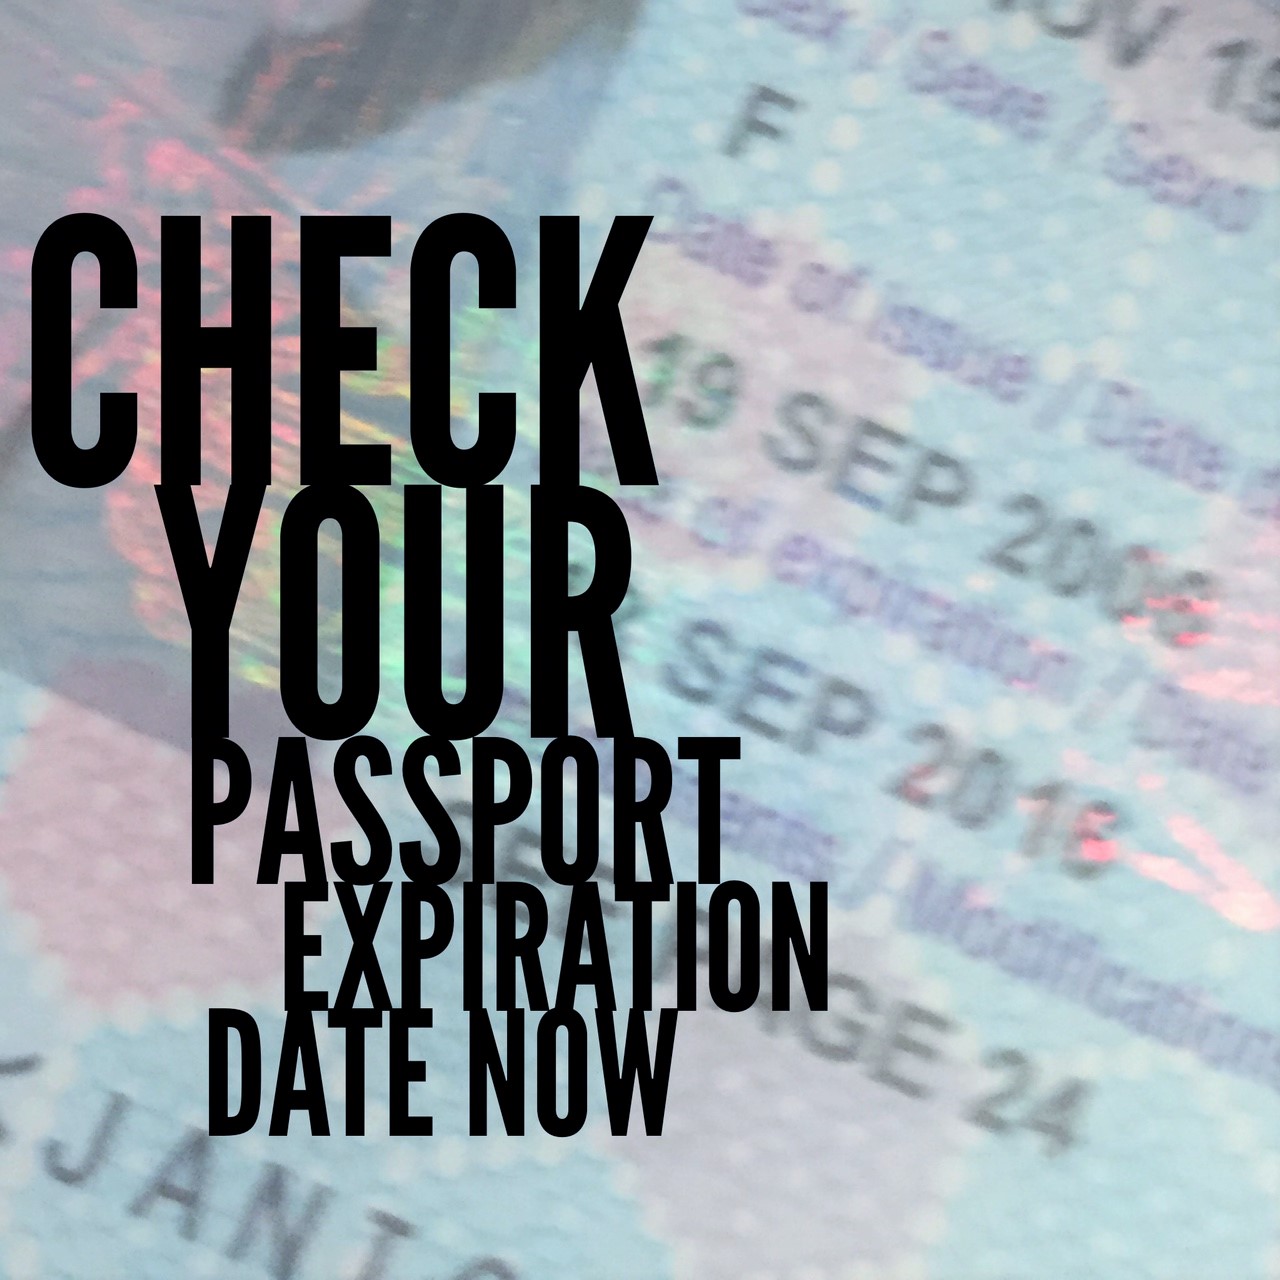 expiration passport travel